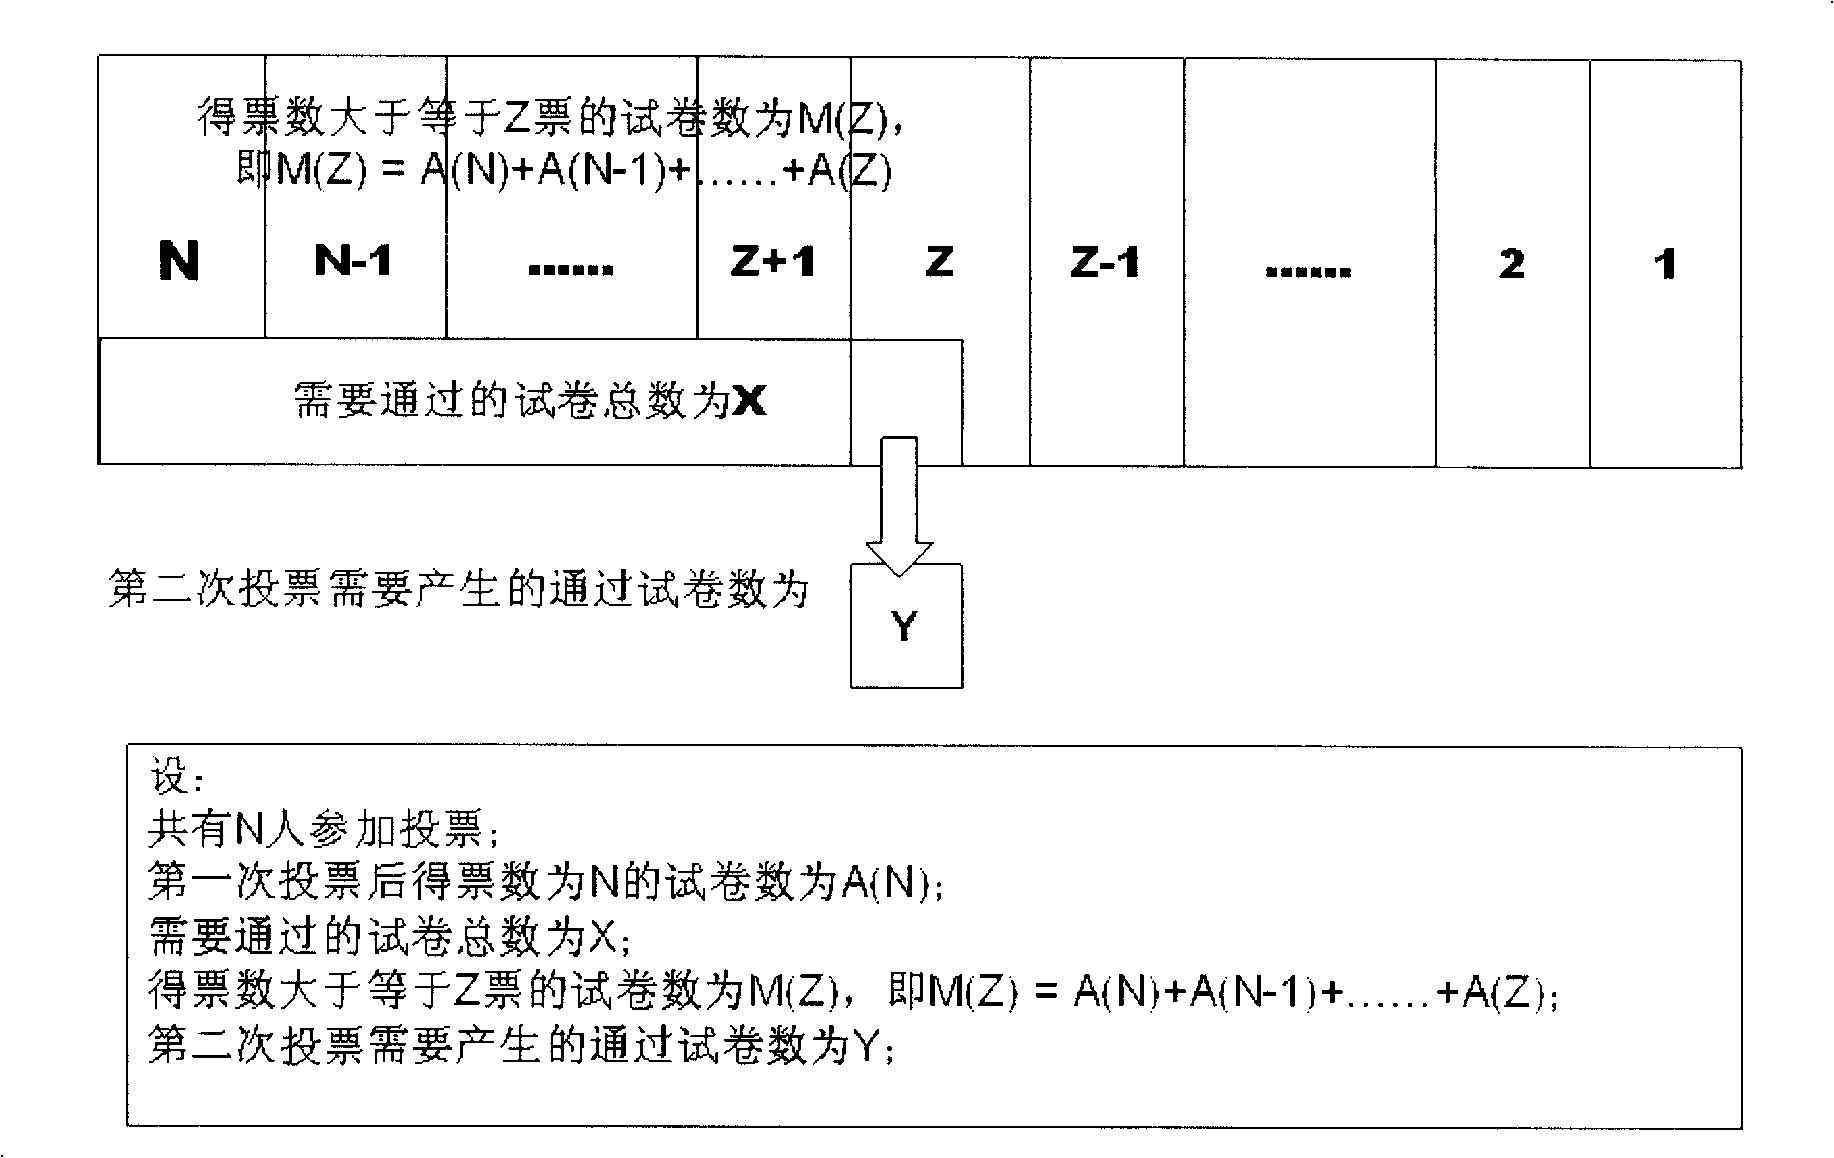 Art test paper computer auxiliary scoring method